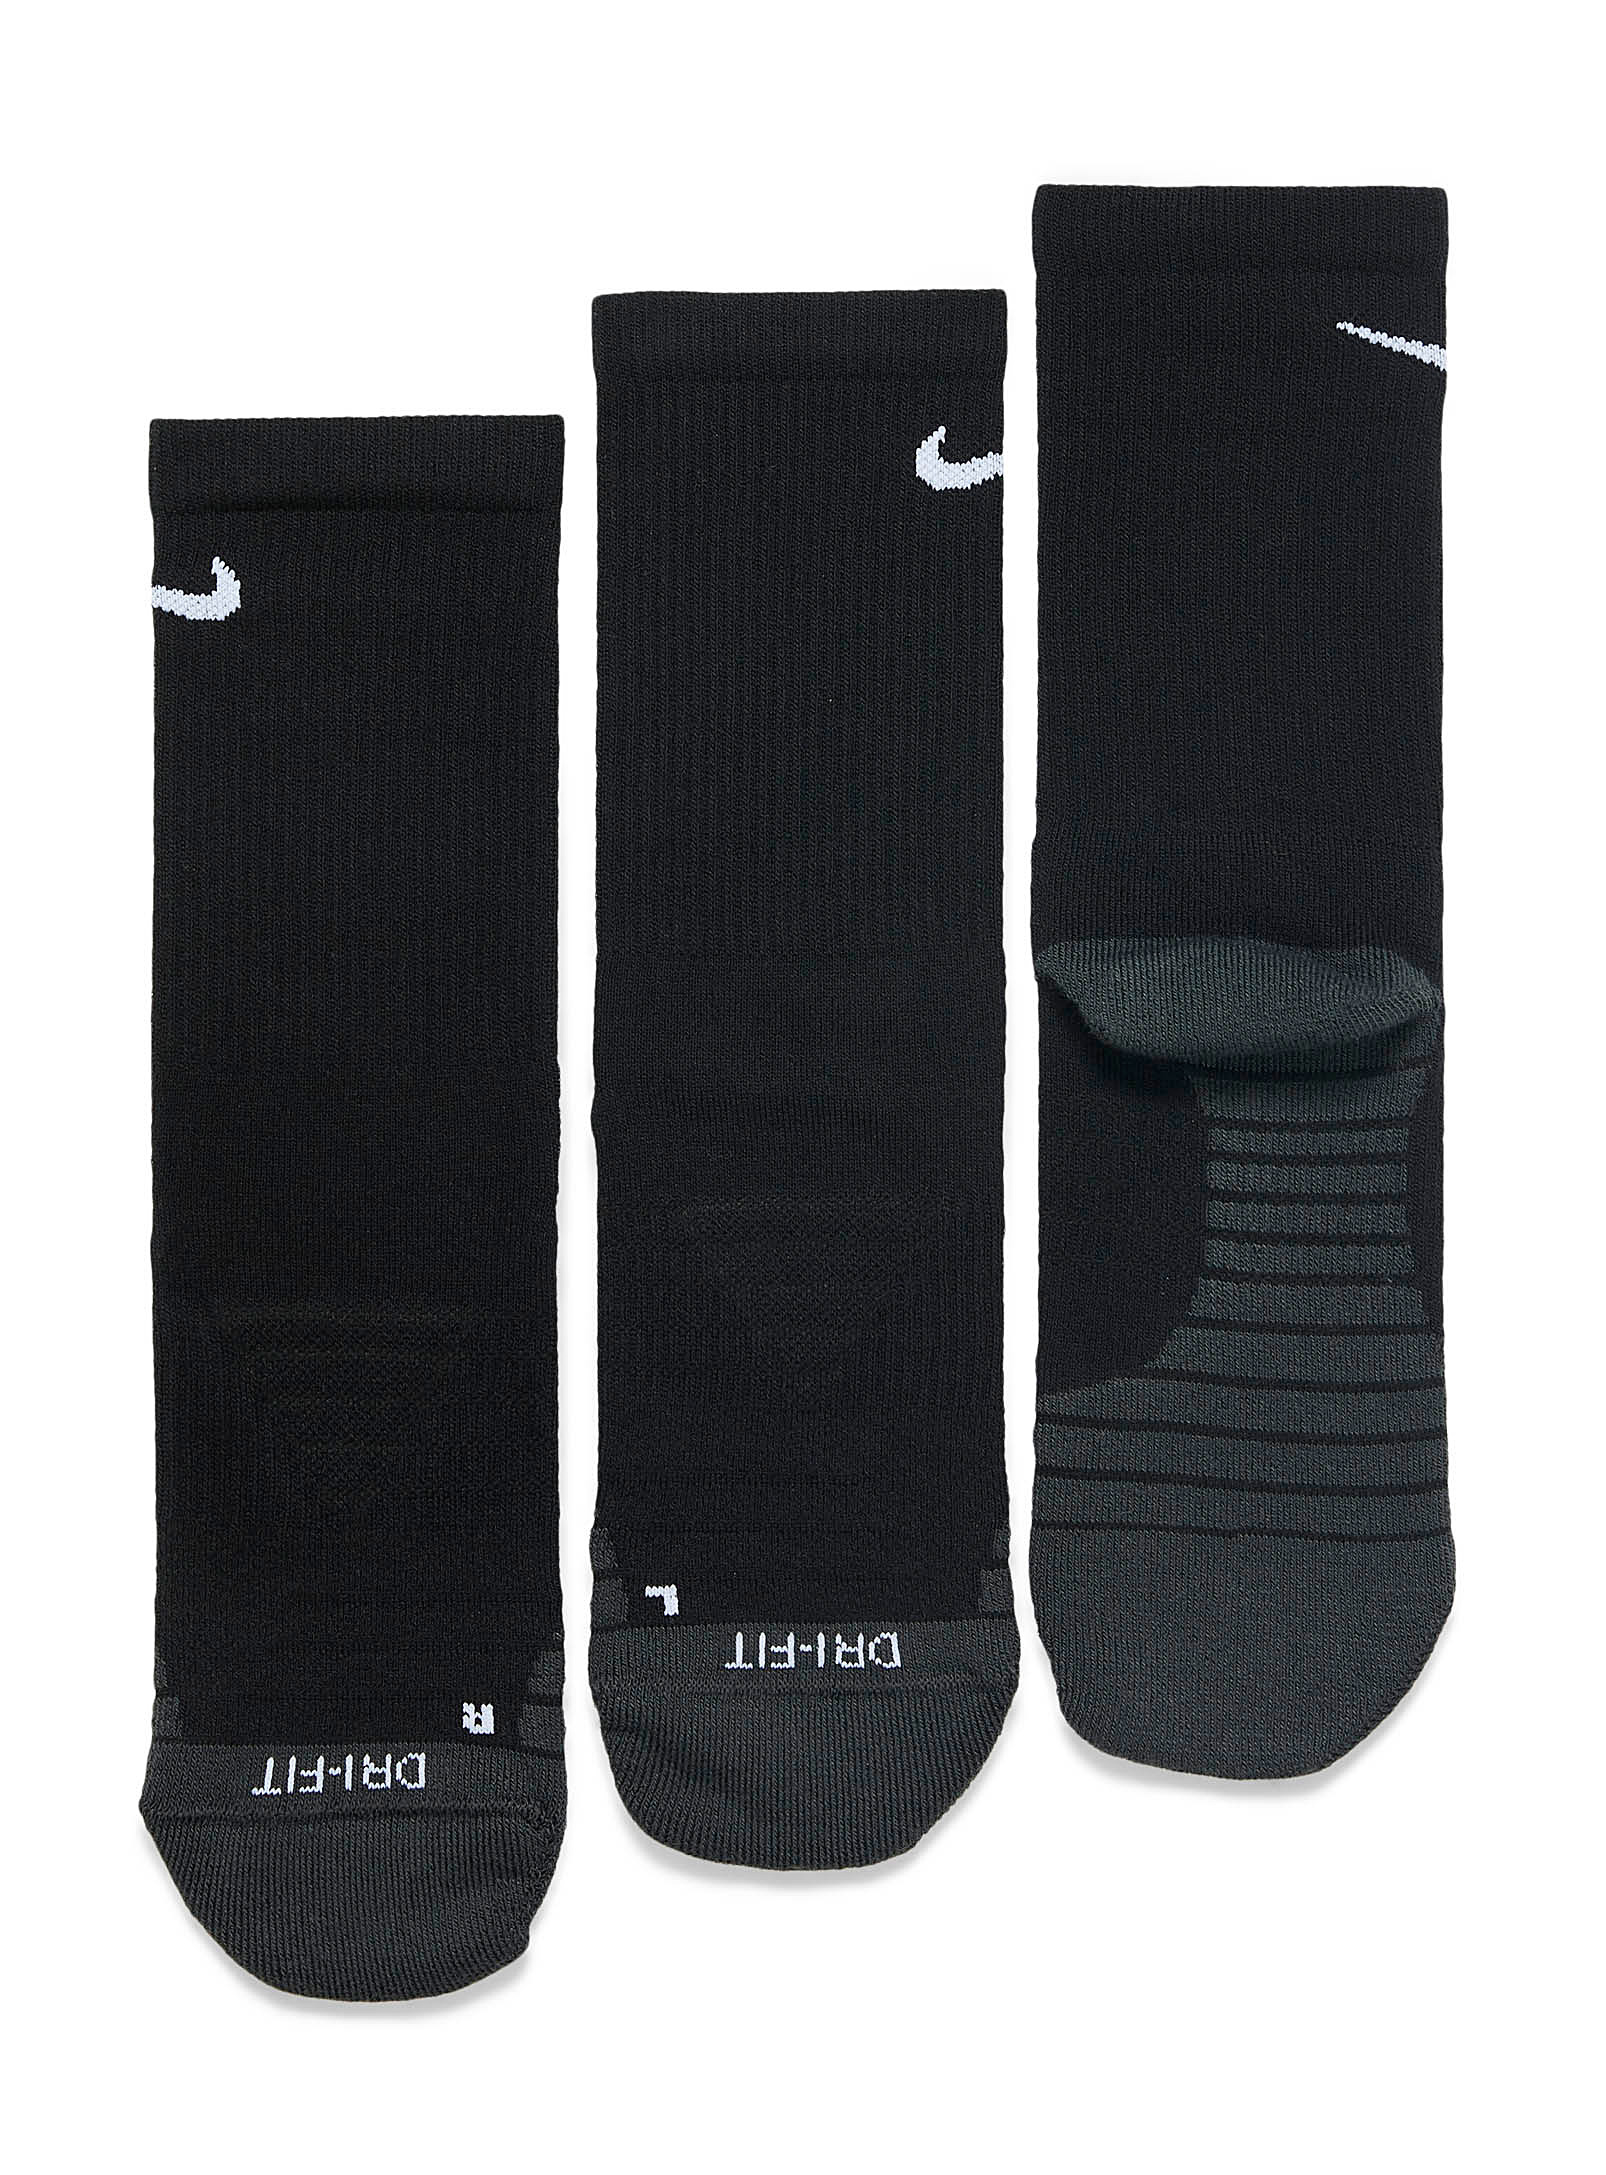 Nike - Women's Everyday Max padded socks Set of 3